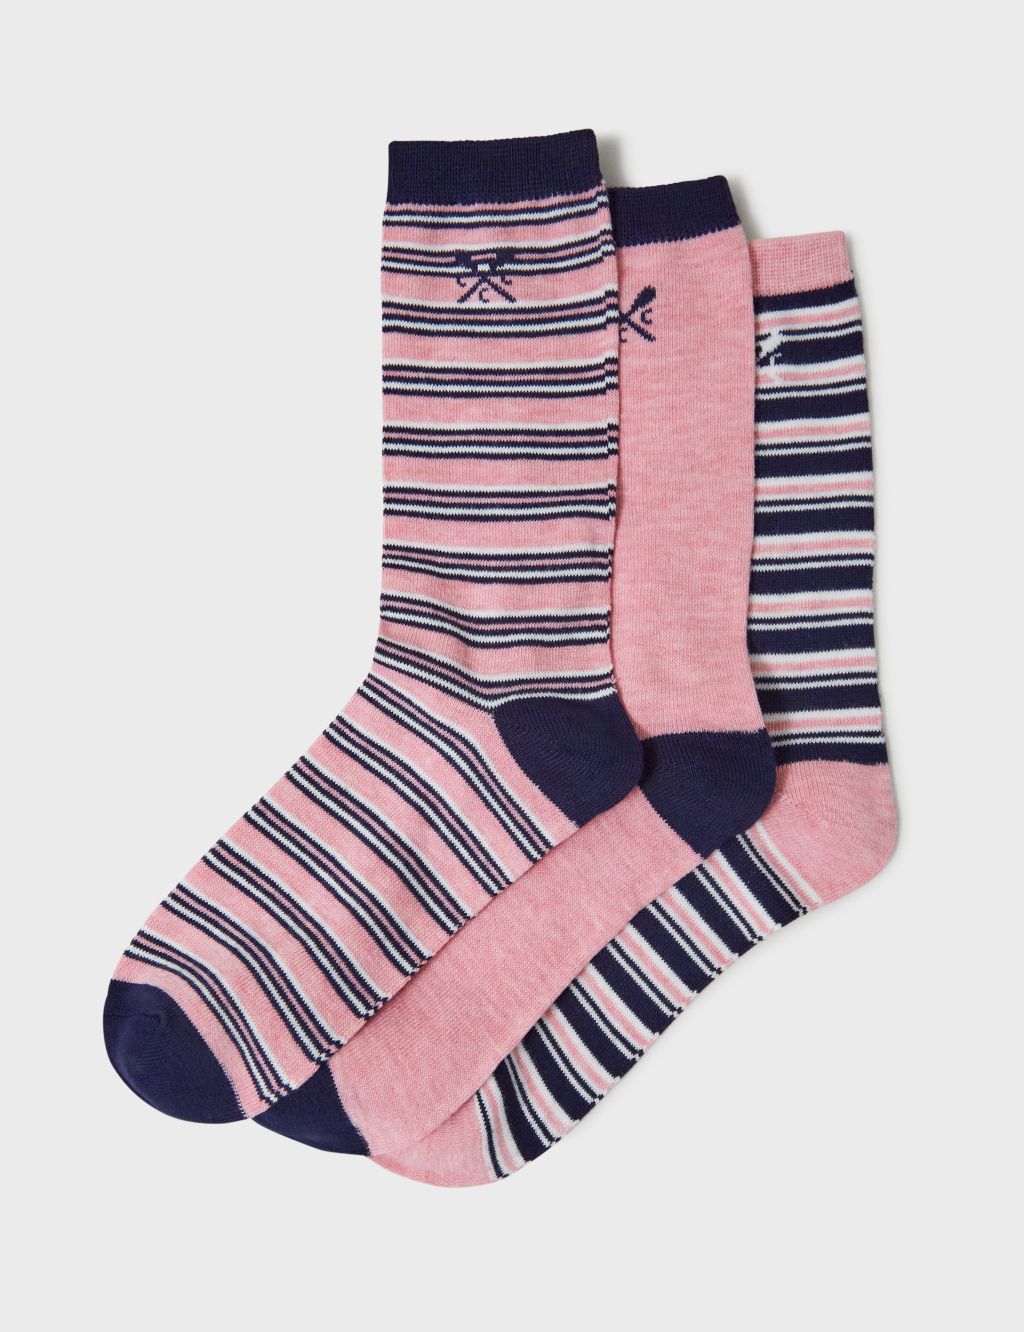 3pk Striped Ankle High Socks